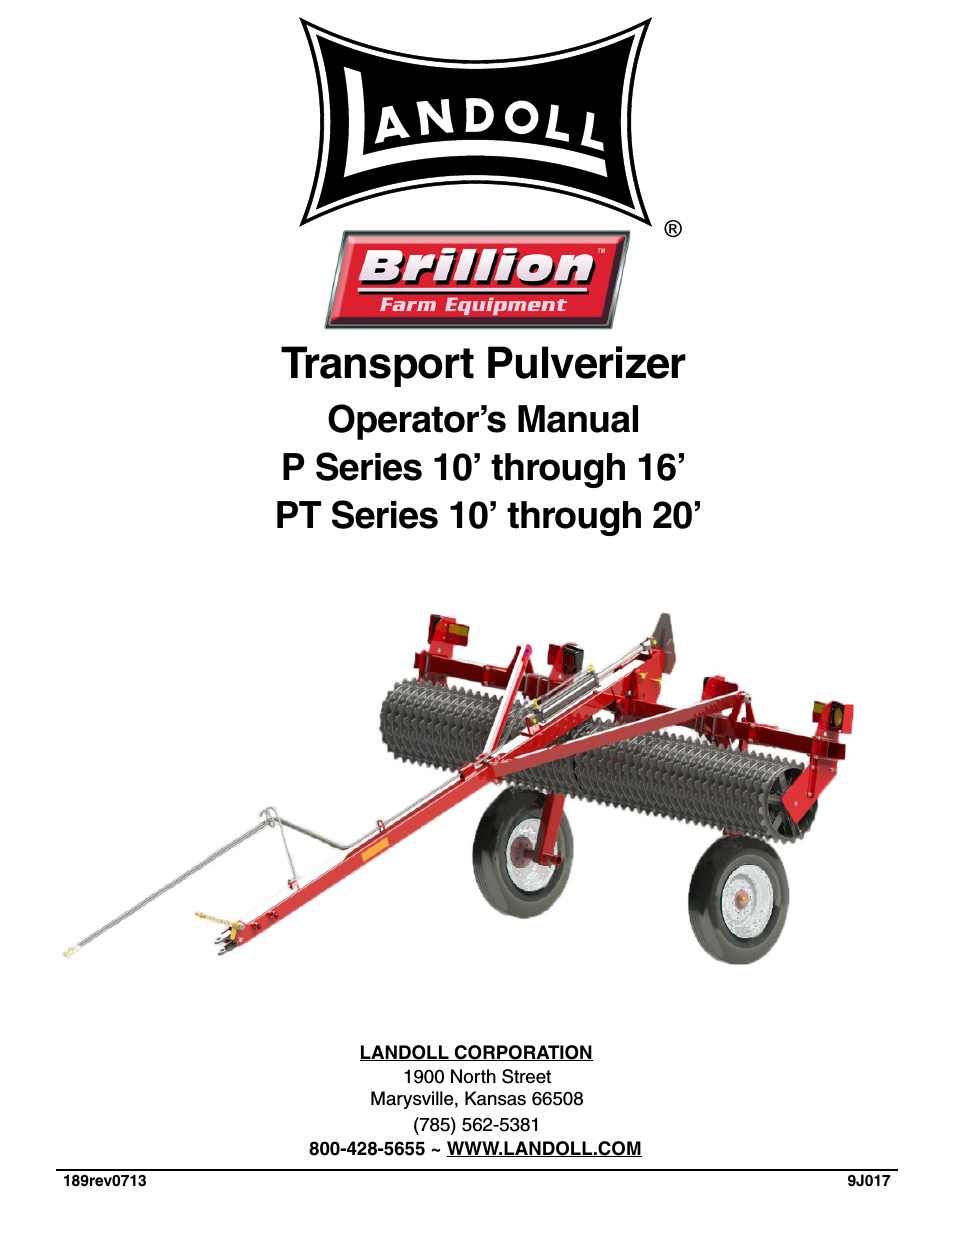 P Series 10 through 16 Transport Pulverizer